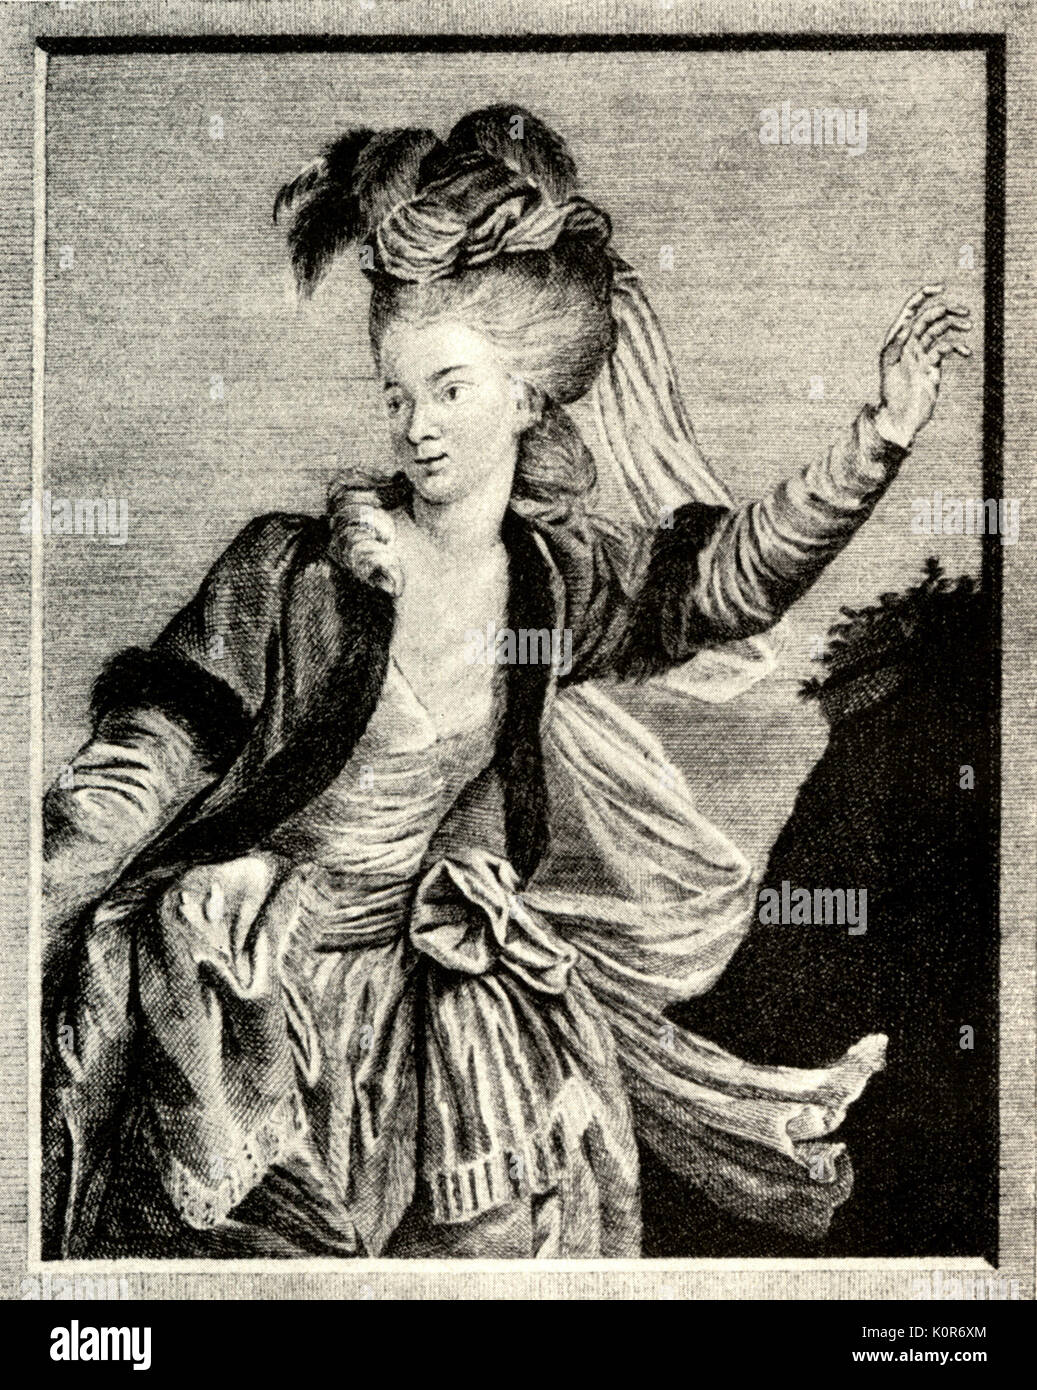 Mozart's sister-in-law Aloysia Weber Lange as Zemire in Gretry's opera 'Zemire et Azor'.  Lithograph by Johann Esaias Nilson, 1784. Stock Photo